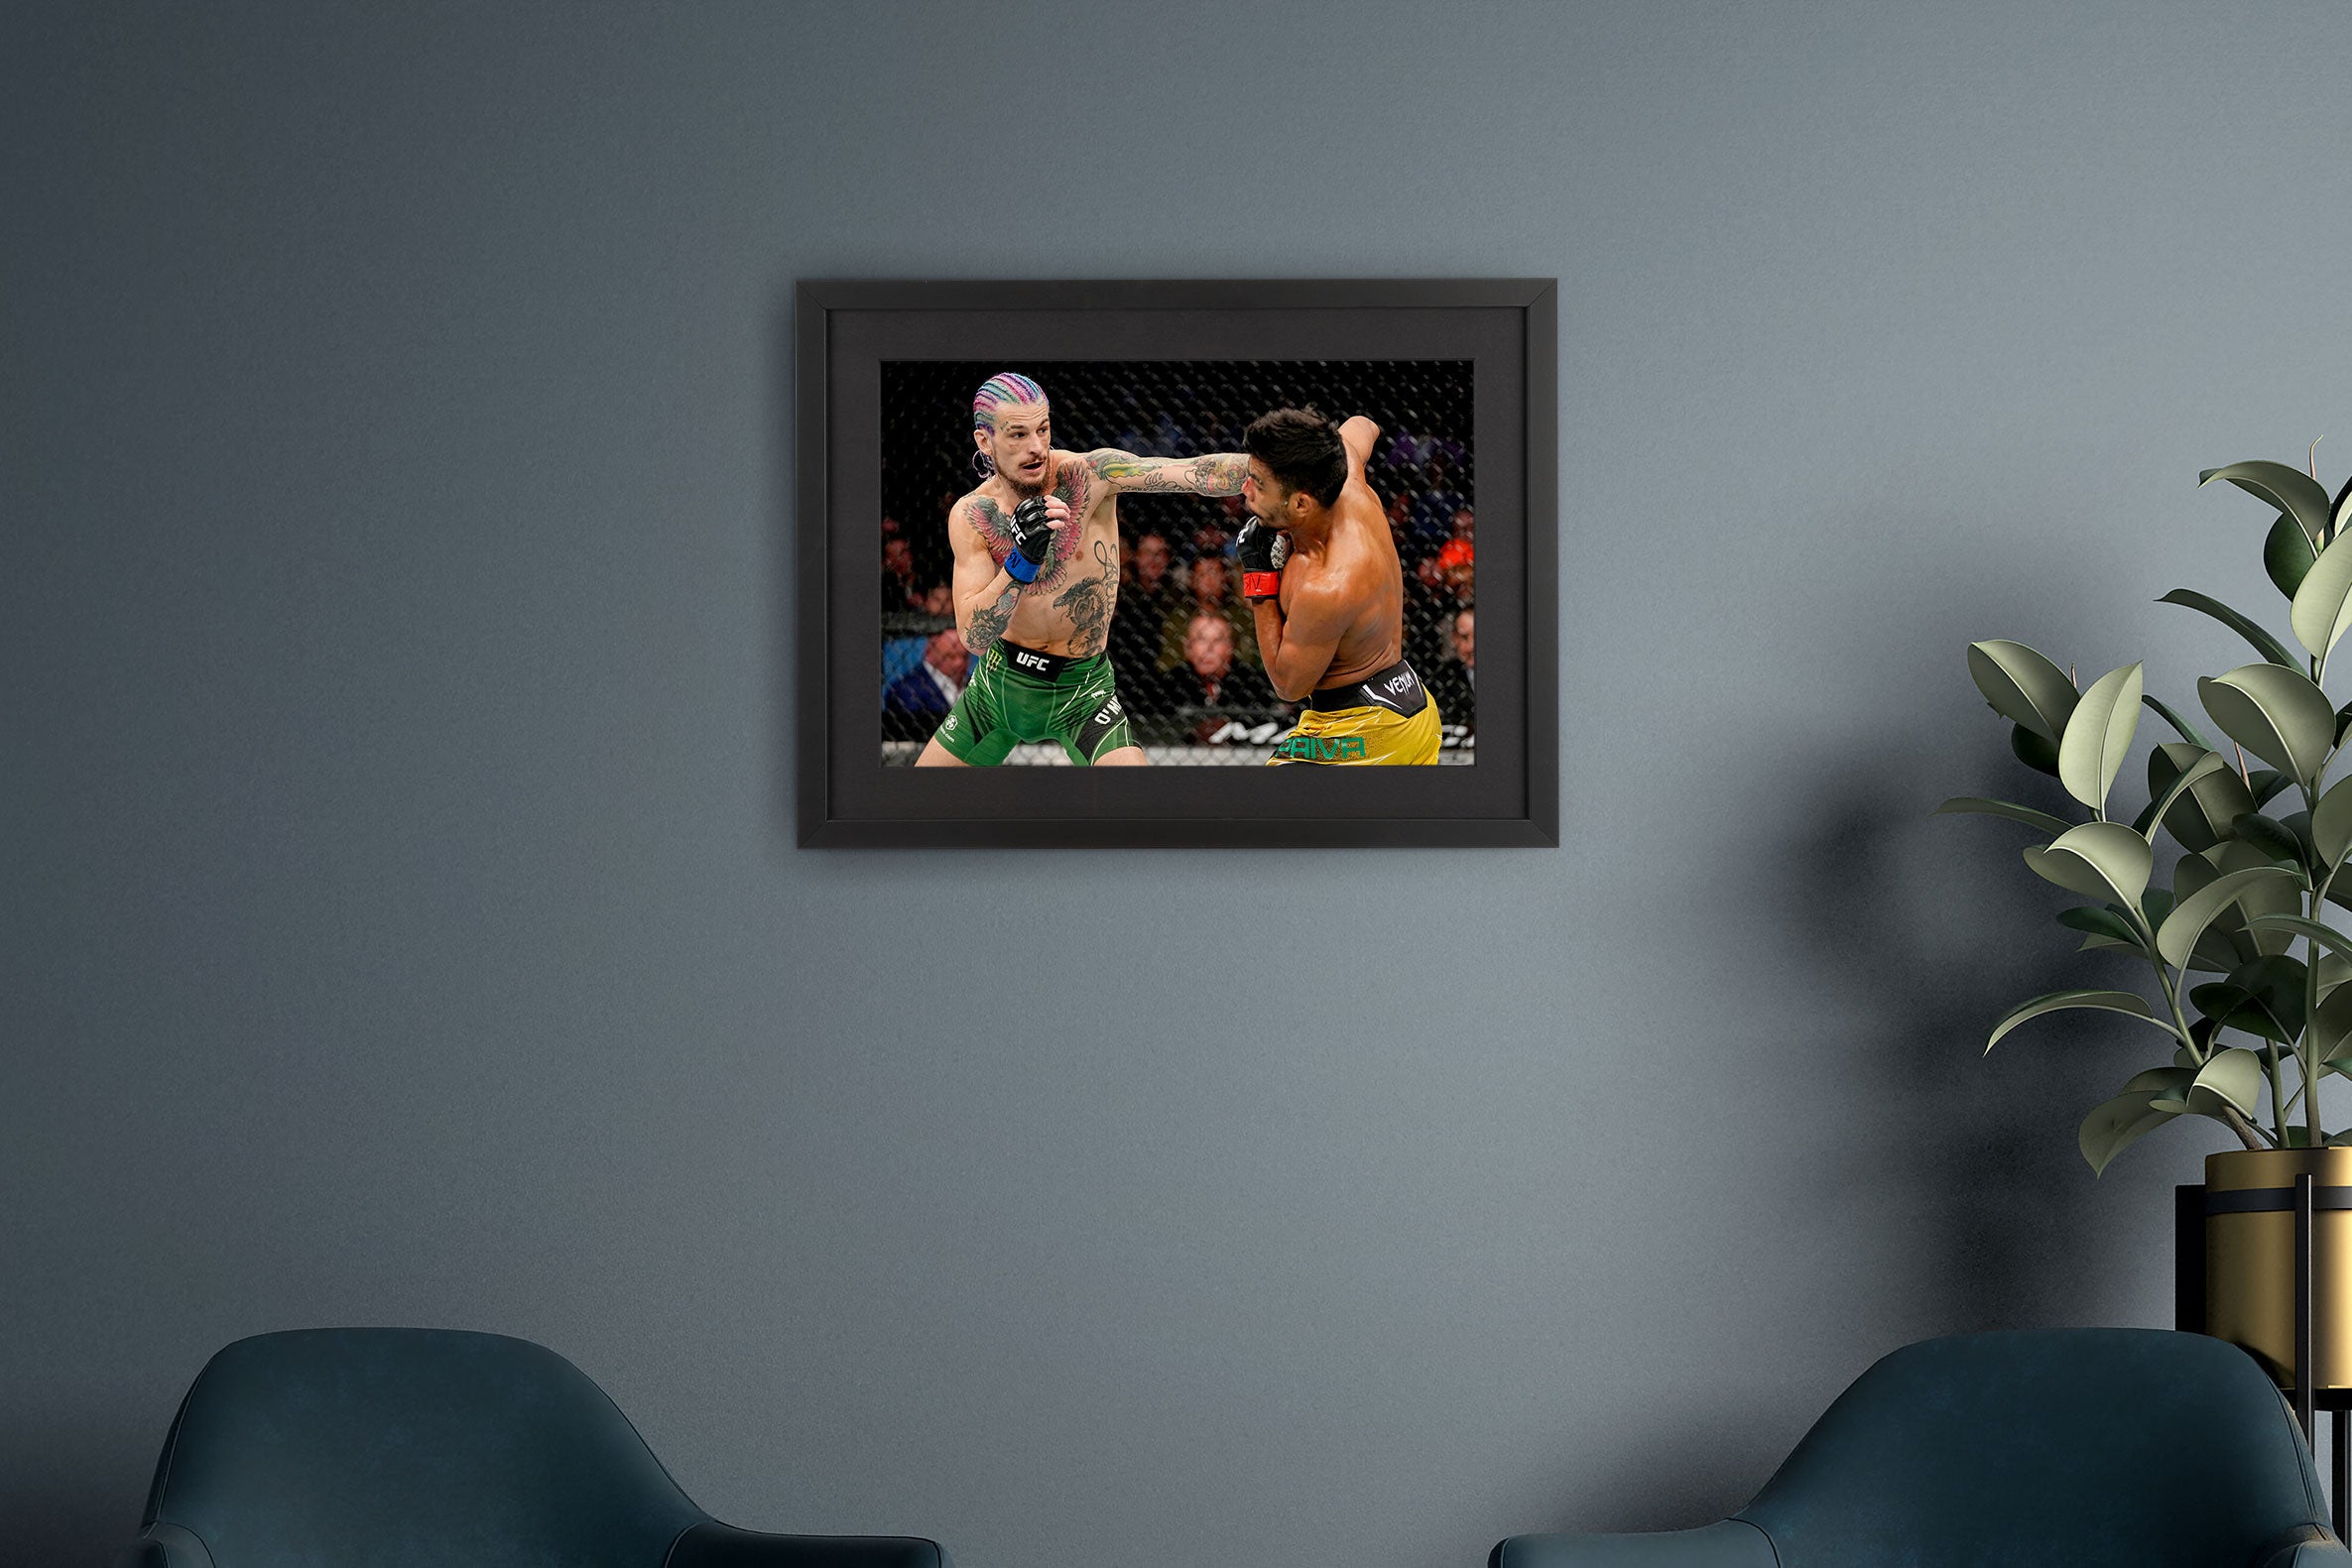 Sean O'Malley Framed Photo UFC 269: Oliveira vs. Poirier V1